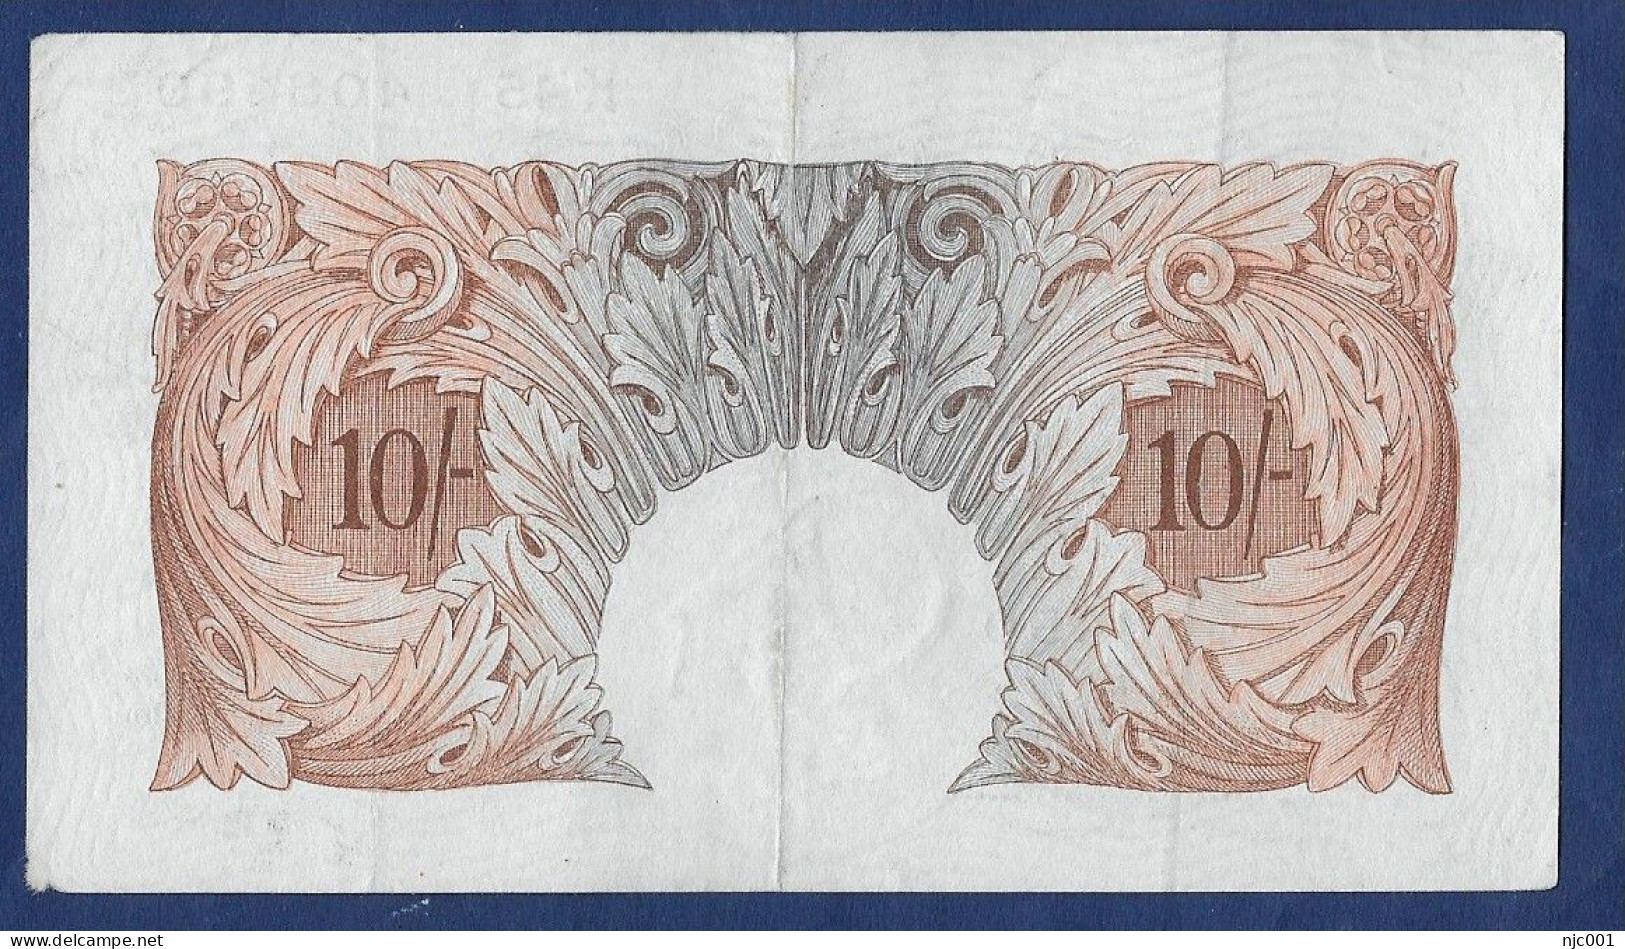 Catterns 10 Shilliings Banknote K45 - 10 Schilling